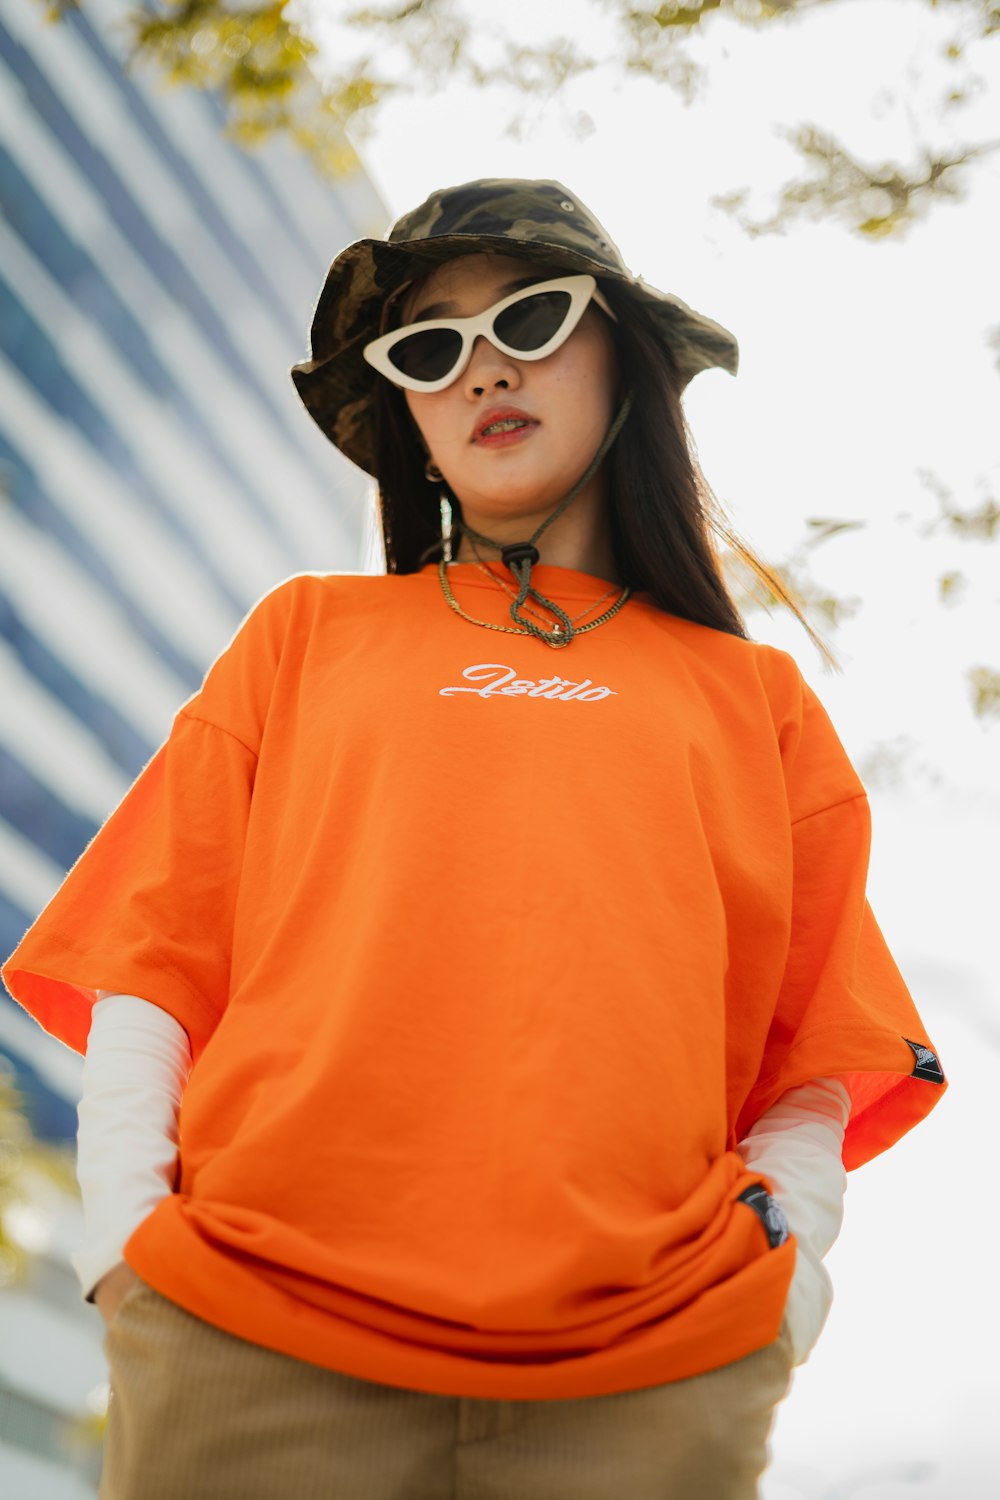 woman in orange crew neck long sleeve shirt wearing black sunglasses